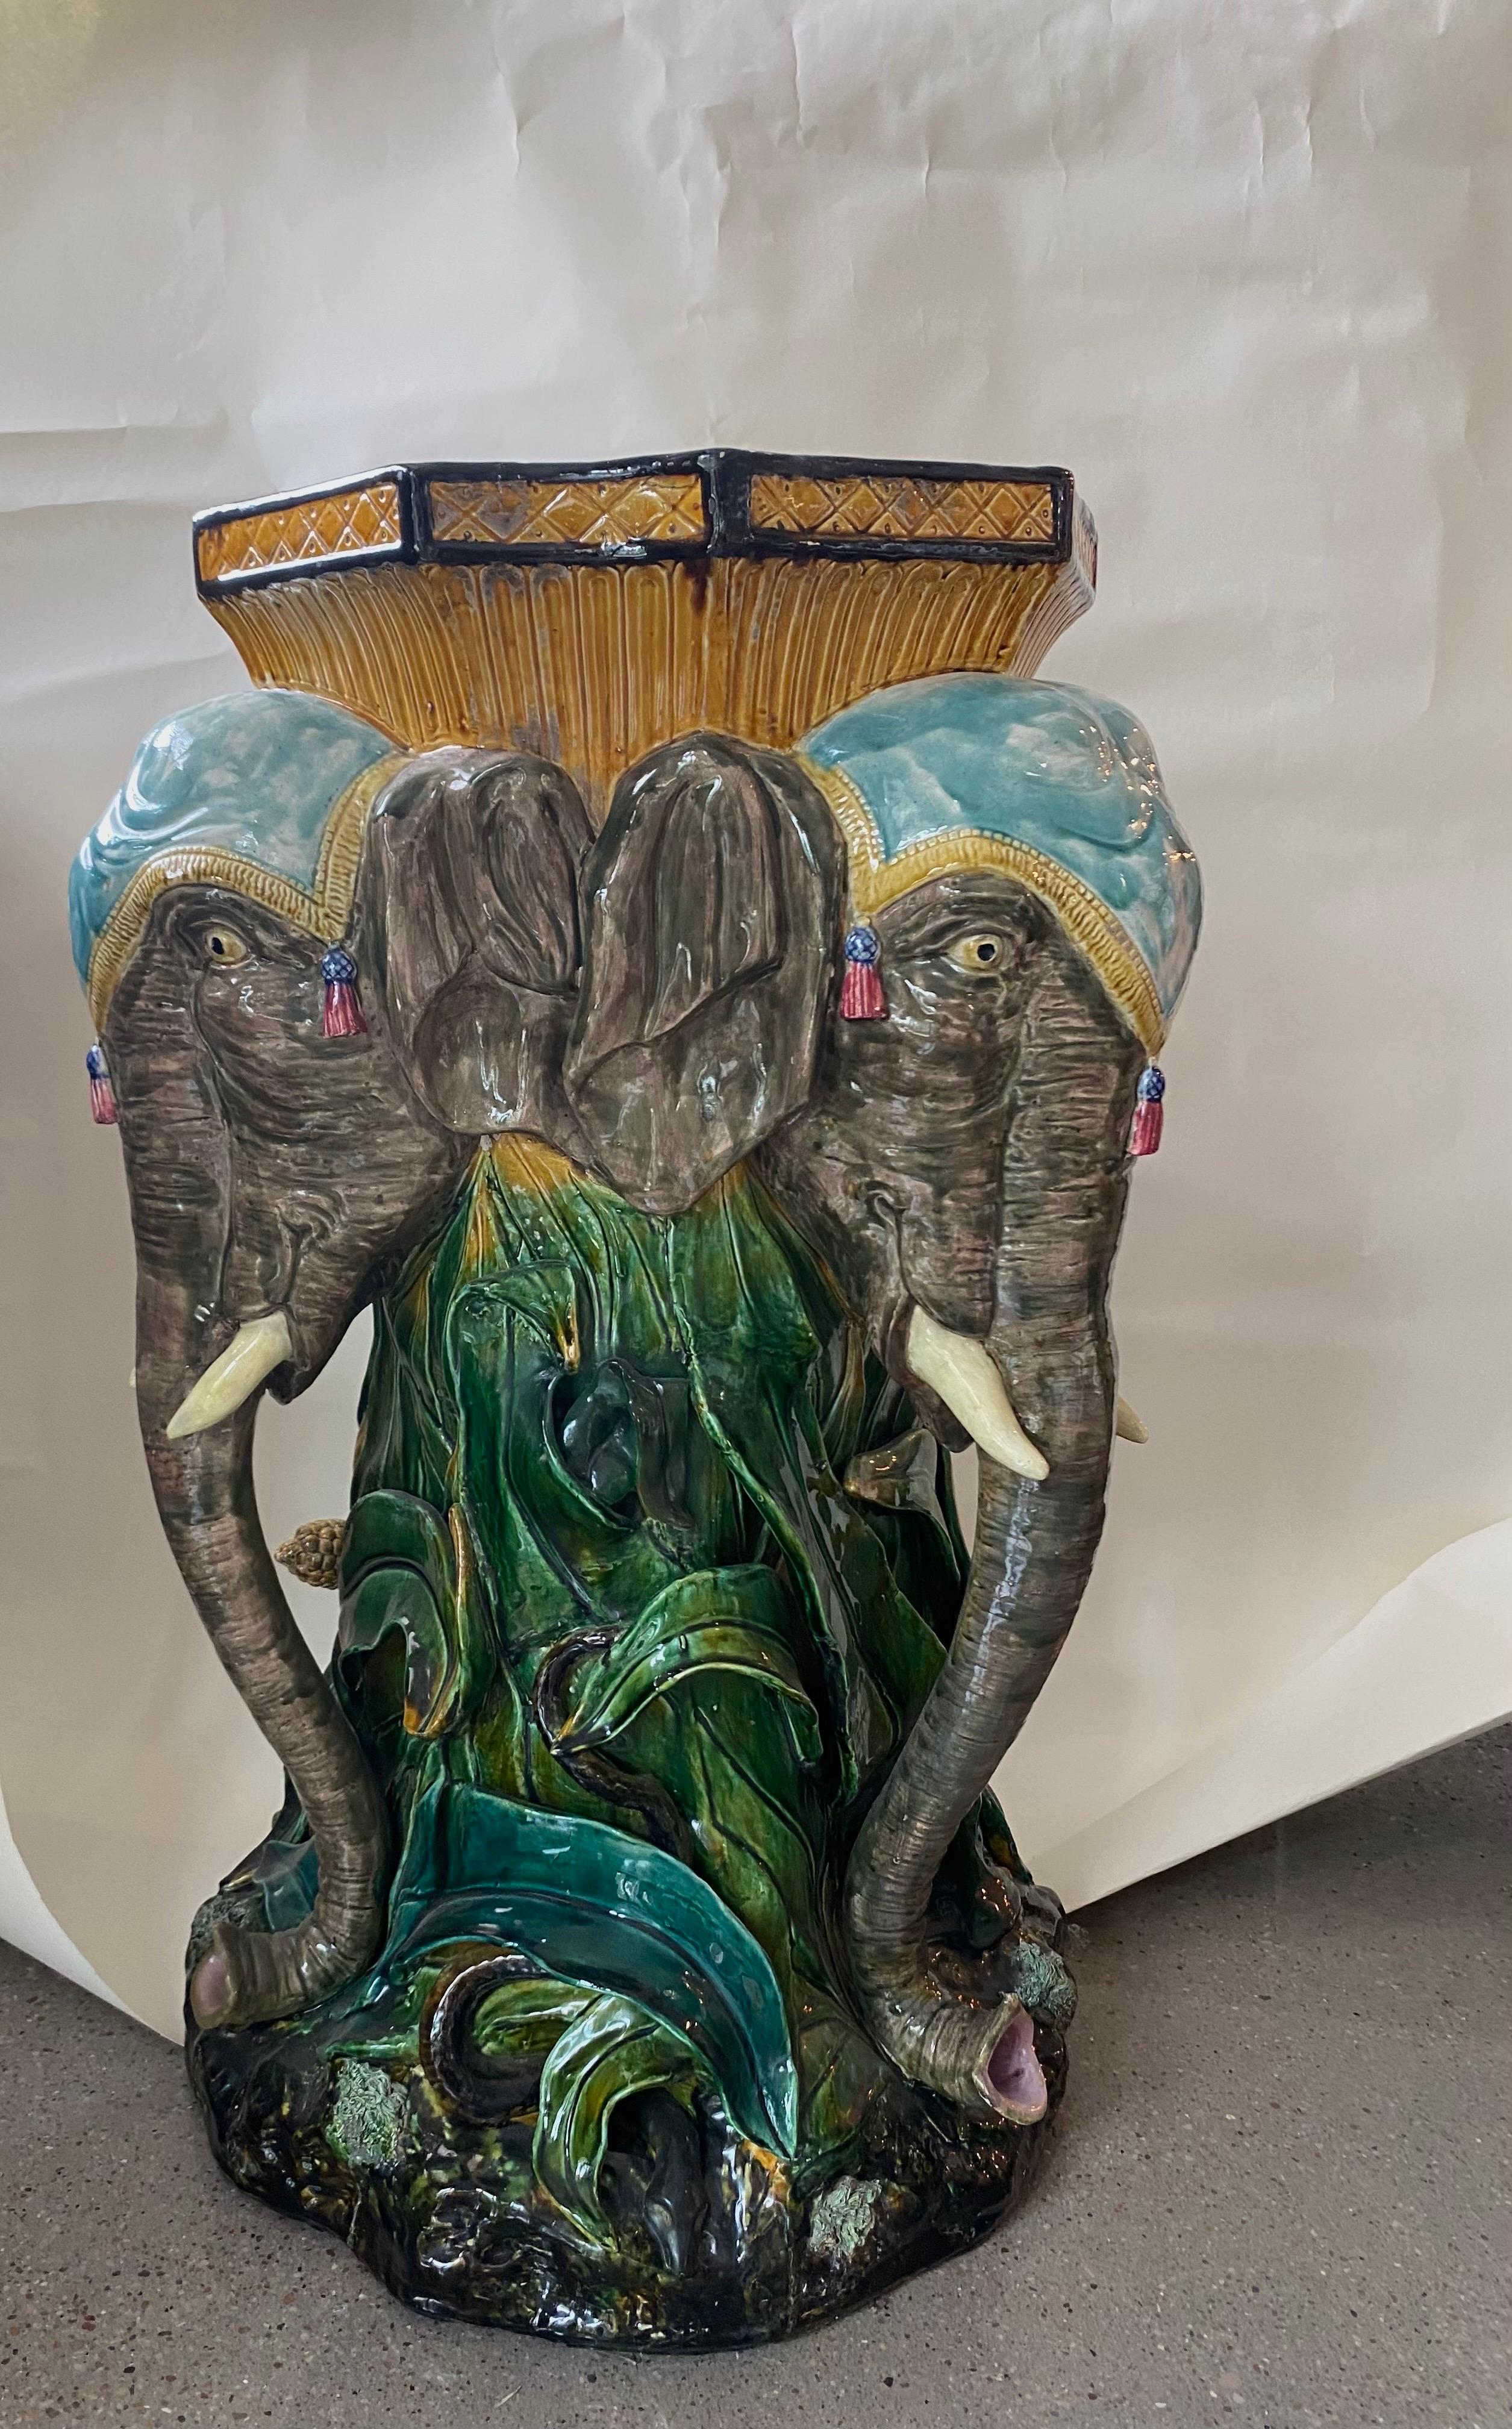 Seltene spektakuläre 19. Jahrhundert Französisch Majolika Sockel Säule mit 3 Elefanten und Blätter.